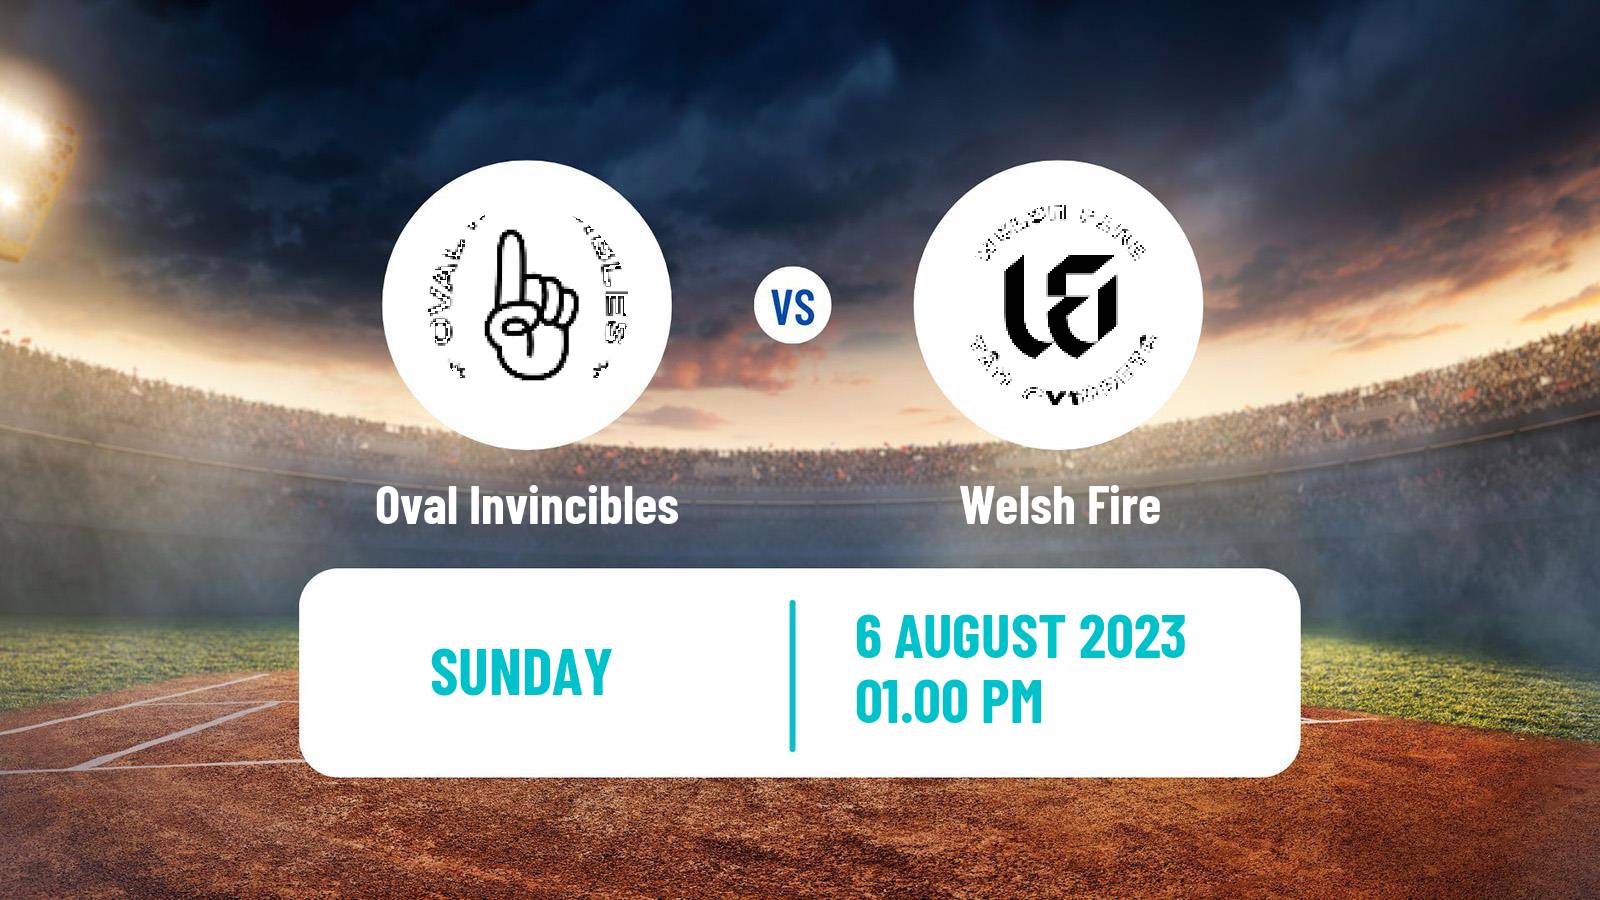 Cricket United Kingdom The Hundred Cricket Oval Invincibles - Welsh Fire